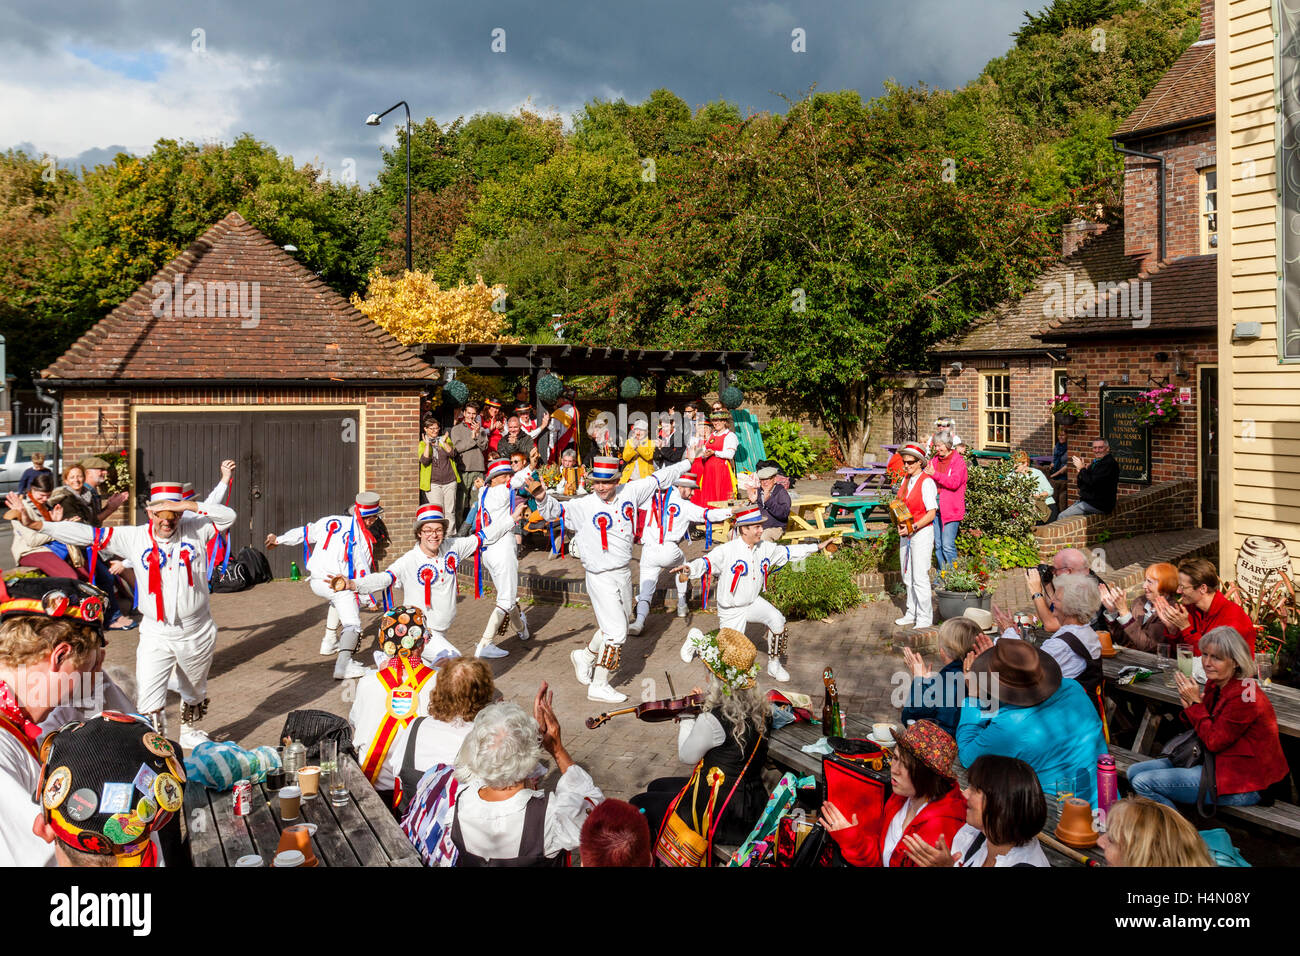 Morris Dancers Perform Outside The Dorset Pub During The Lewes Folk Festival 2016, Lewes, Sussex, UK Stock Photo